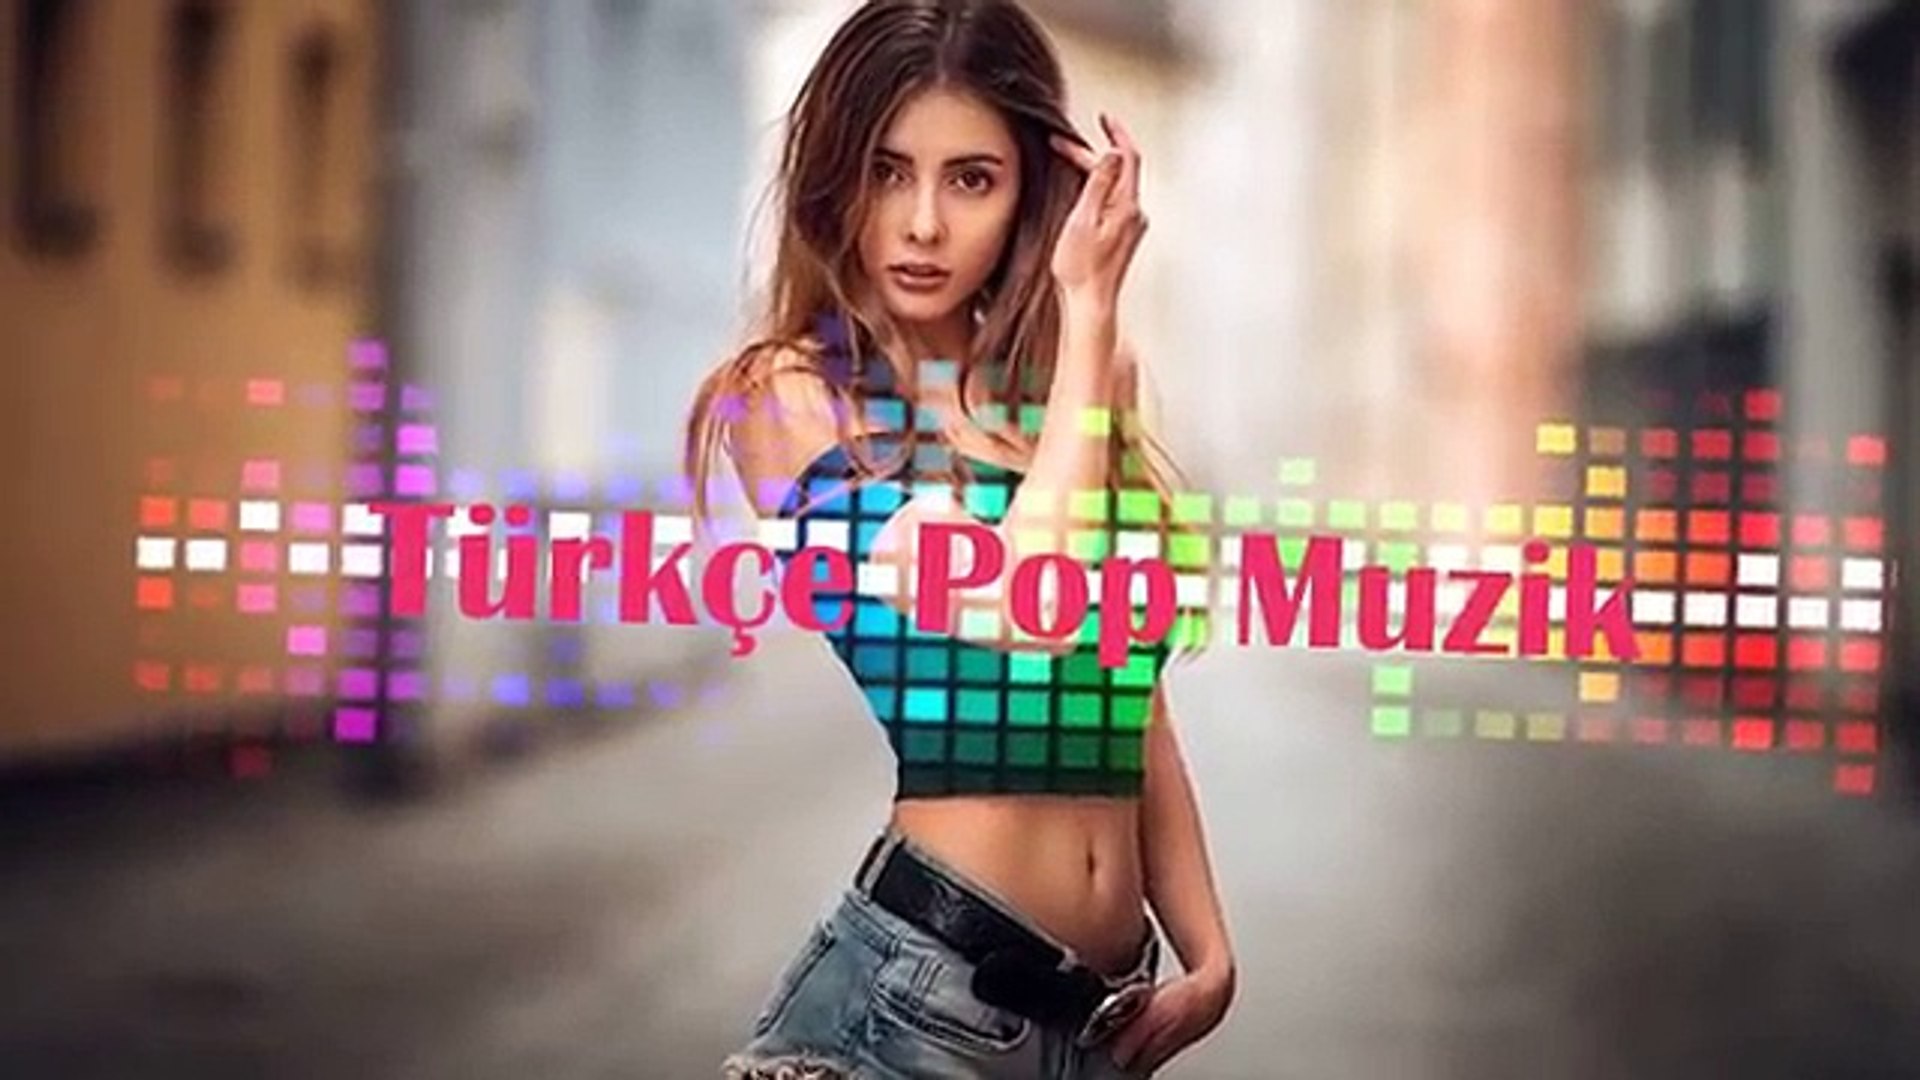 Kopmalik Turkçe Pop Sarkilar 2017 - Dailymotion Video